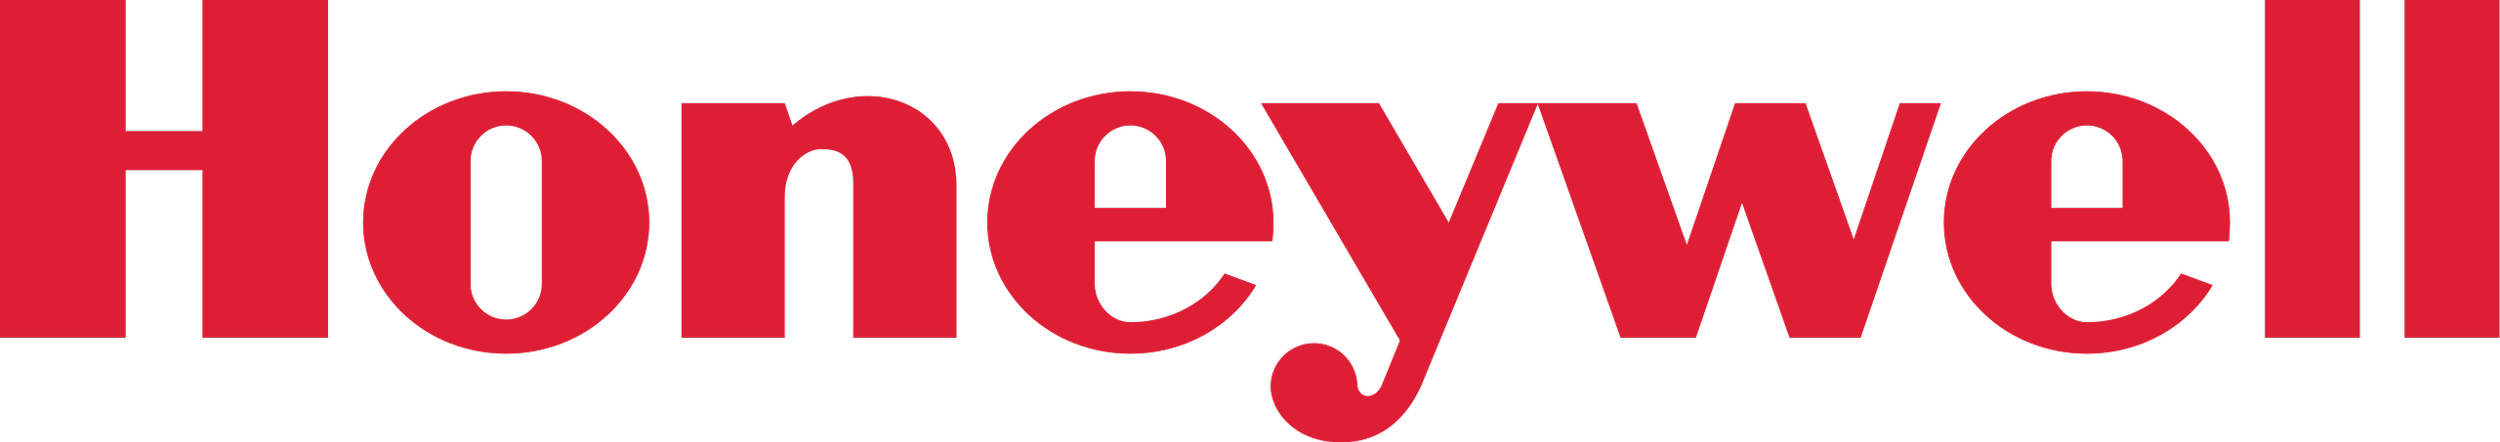 logo-Honeywell.png